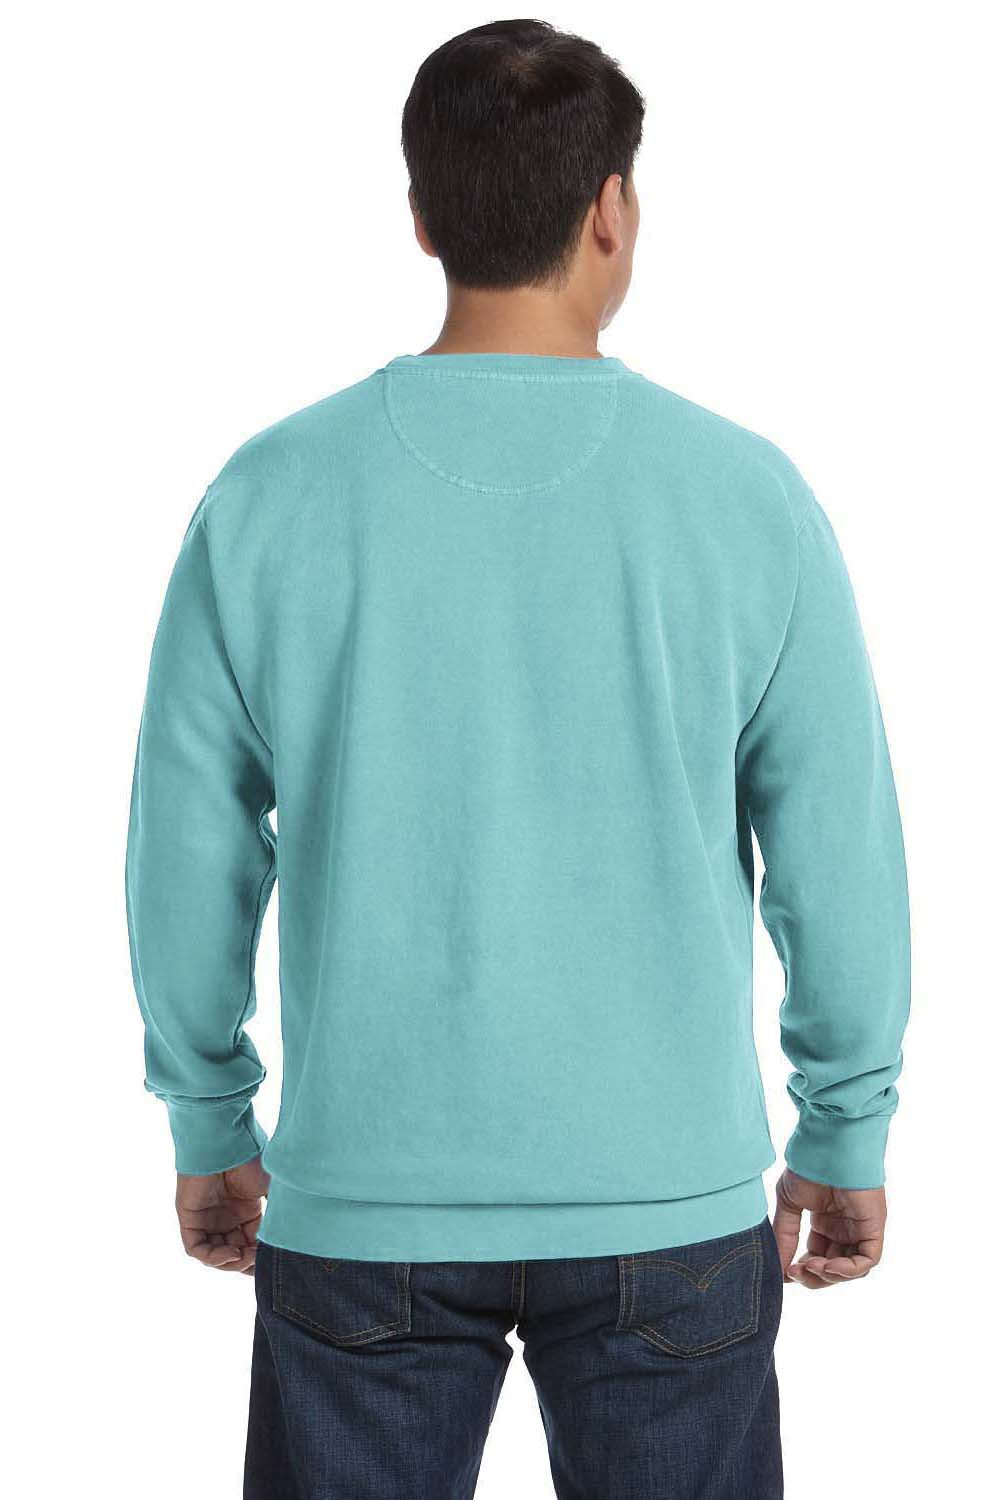 Comfort Colors 1566 Mens Crewneck Sweatshirt Chalky Mint Blue Back